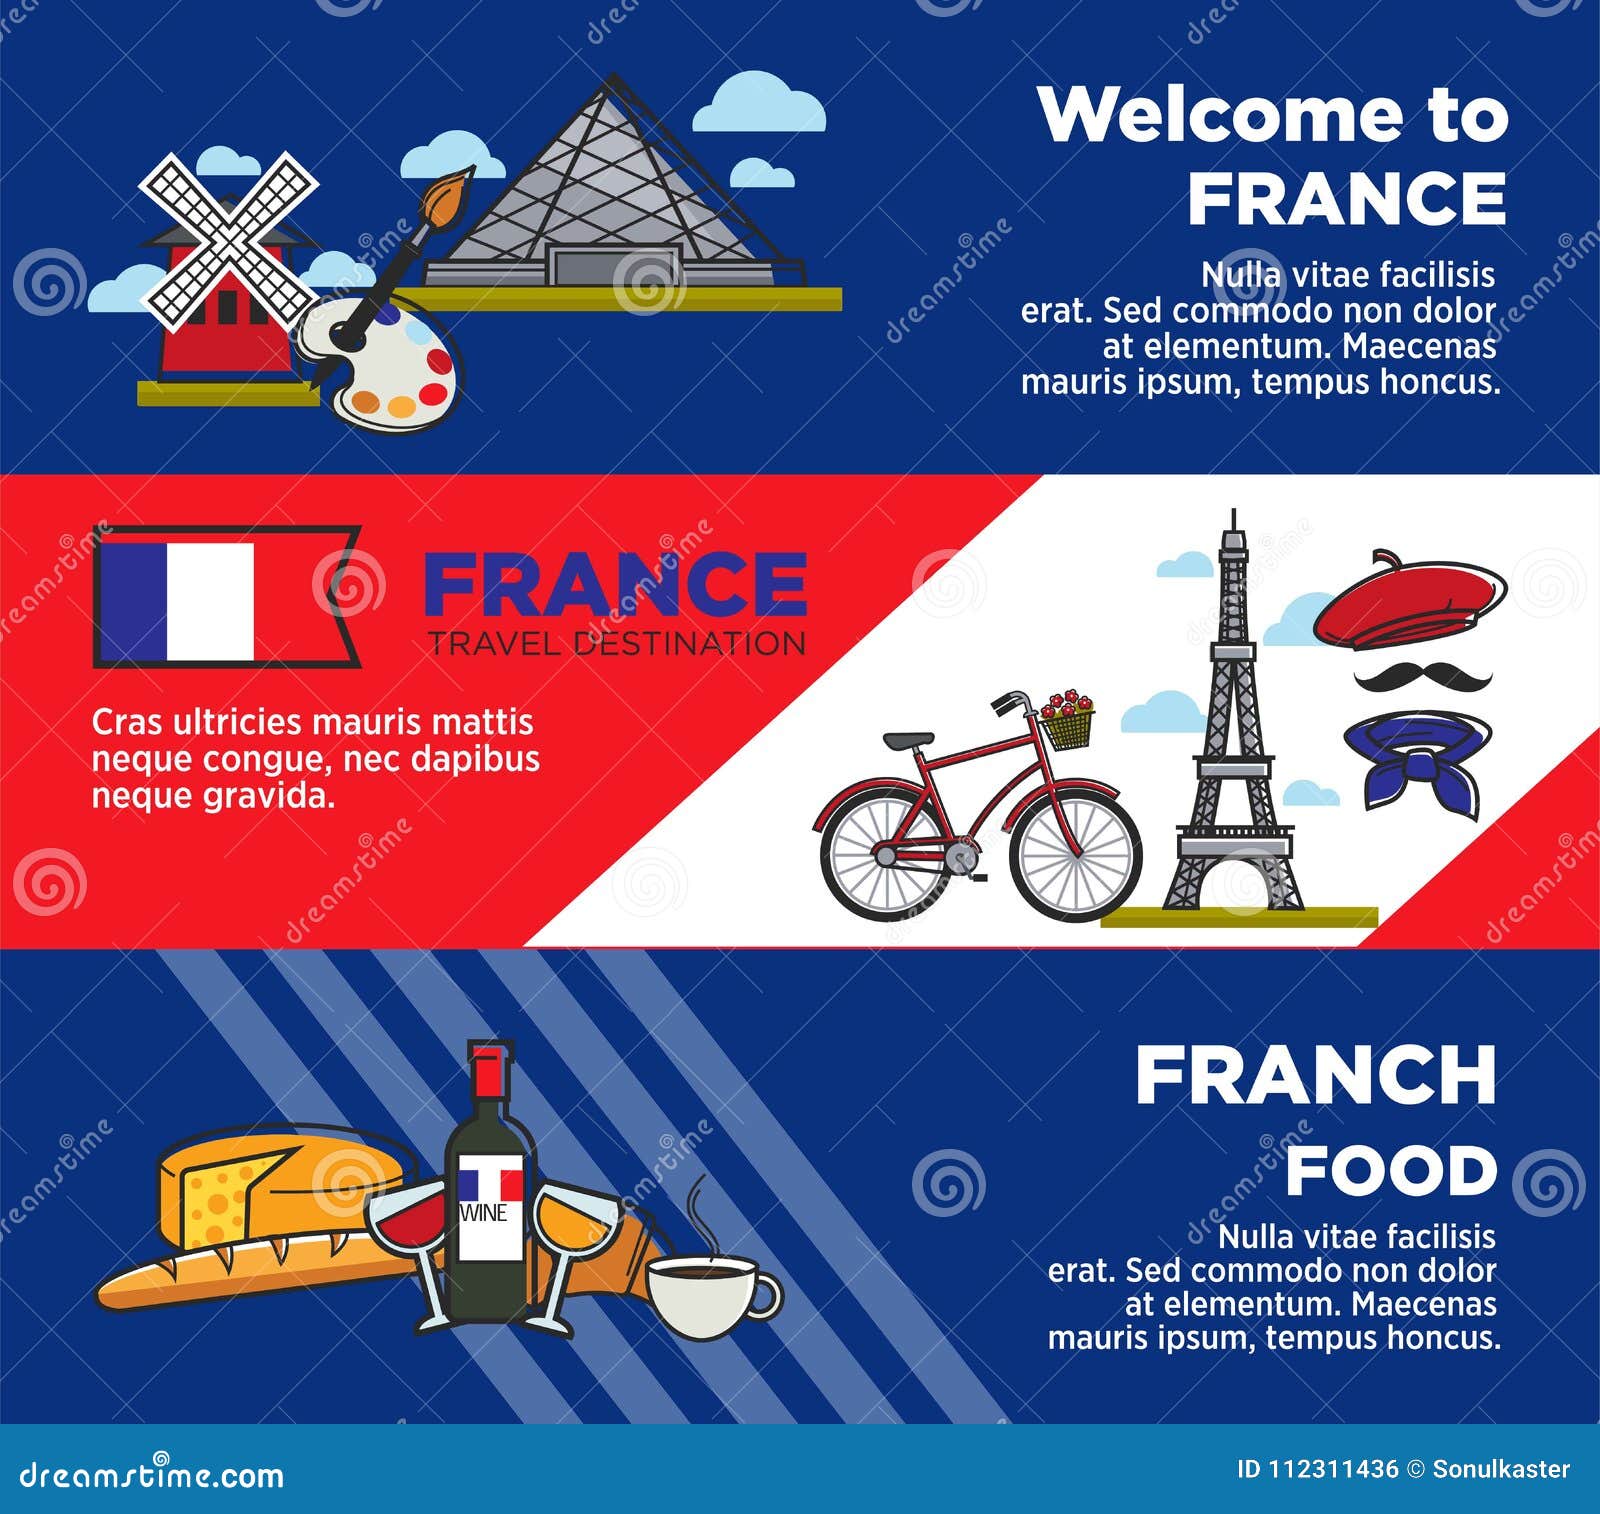 france tourism tagline